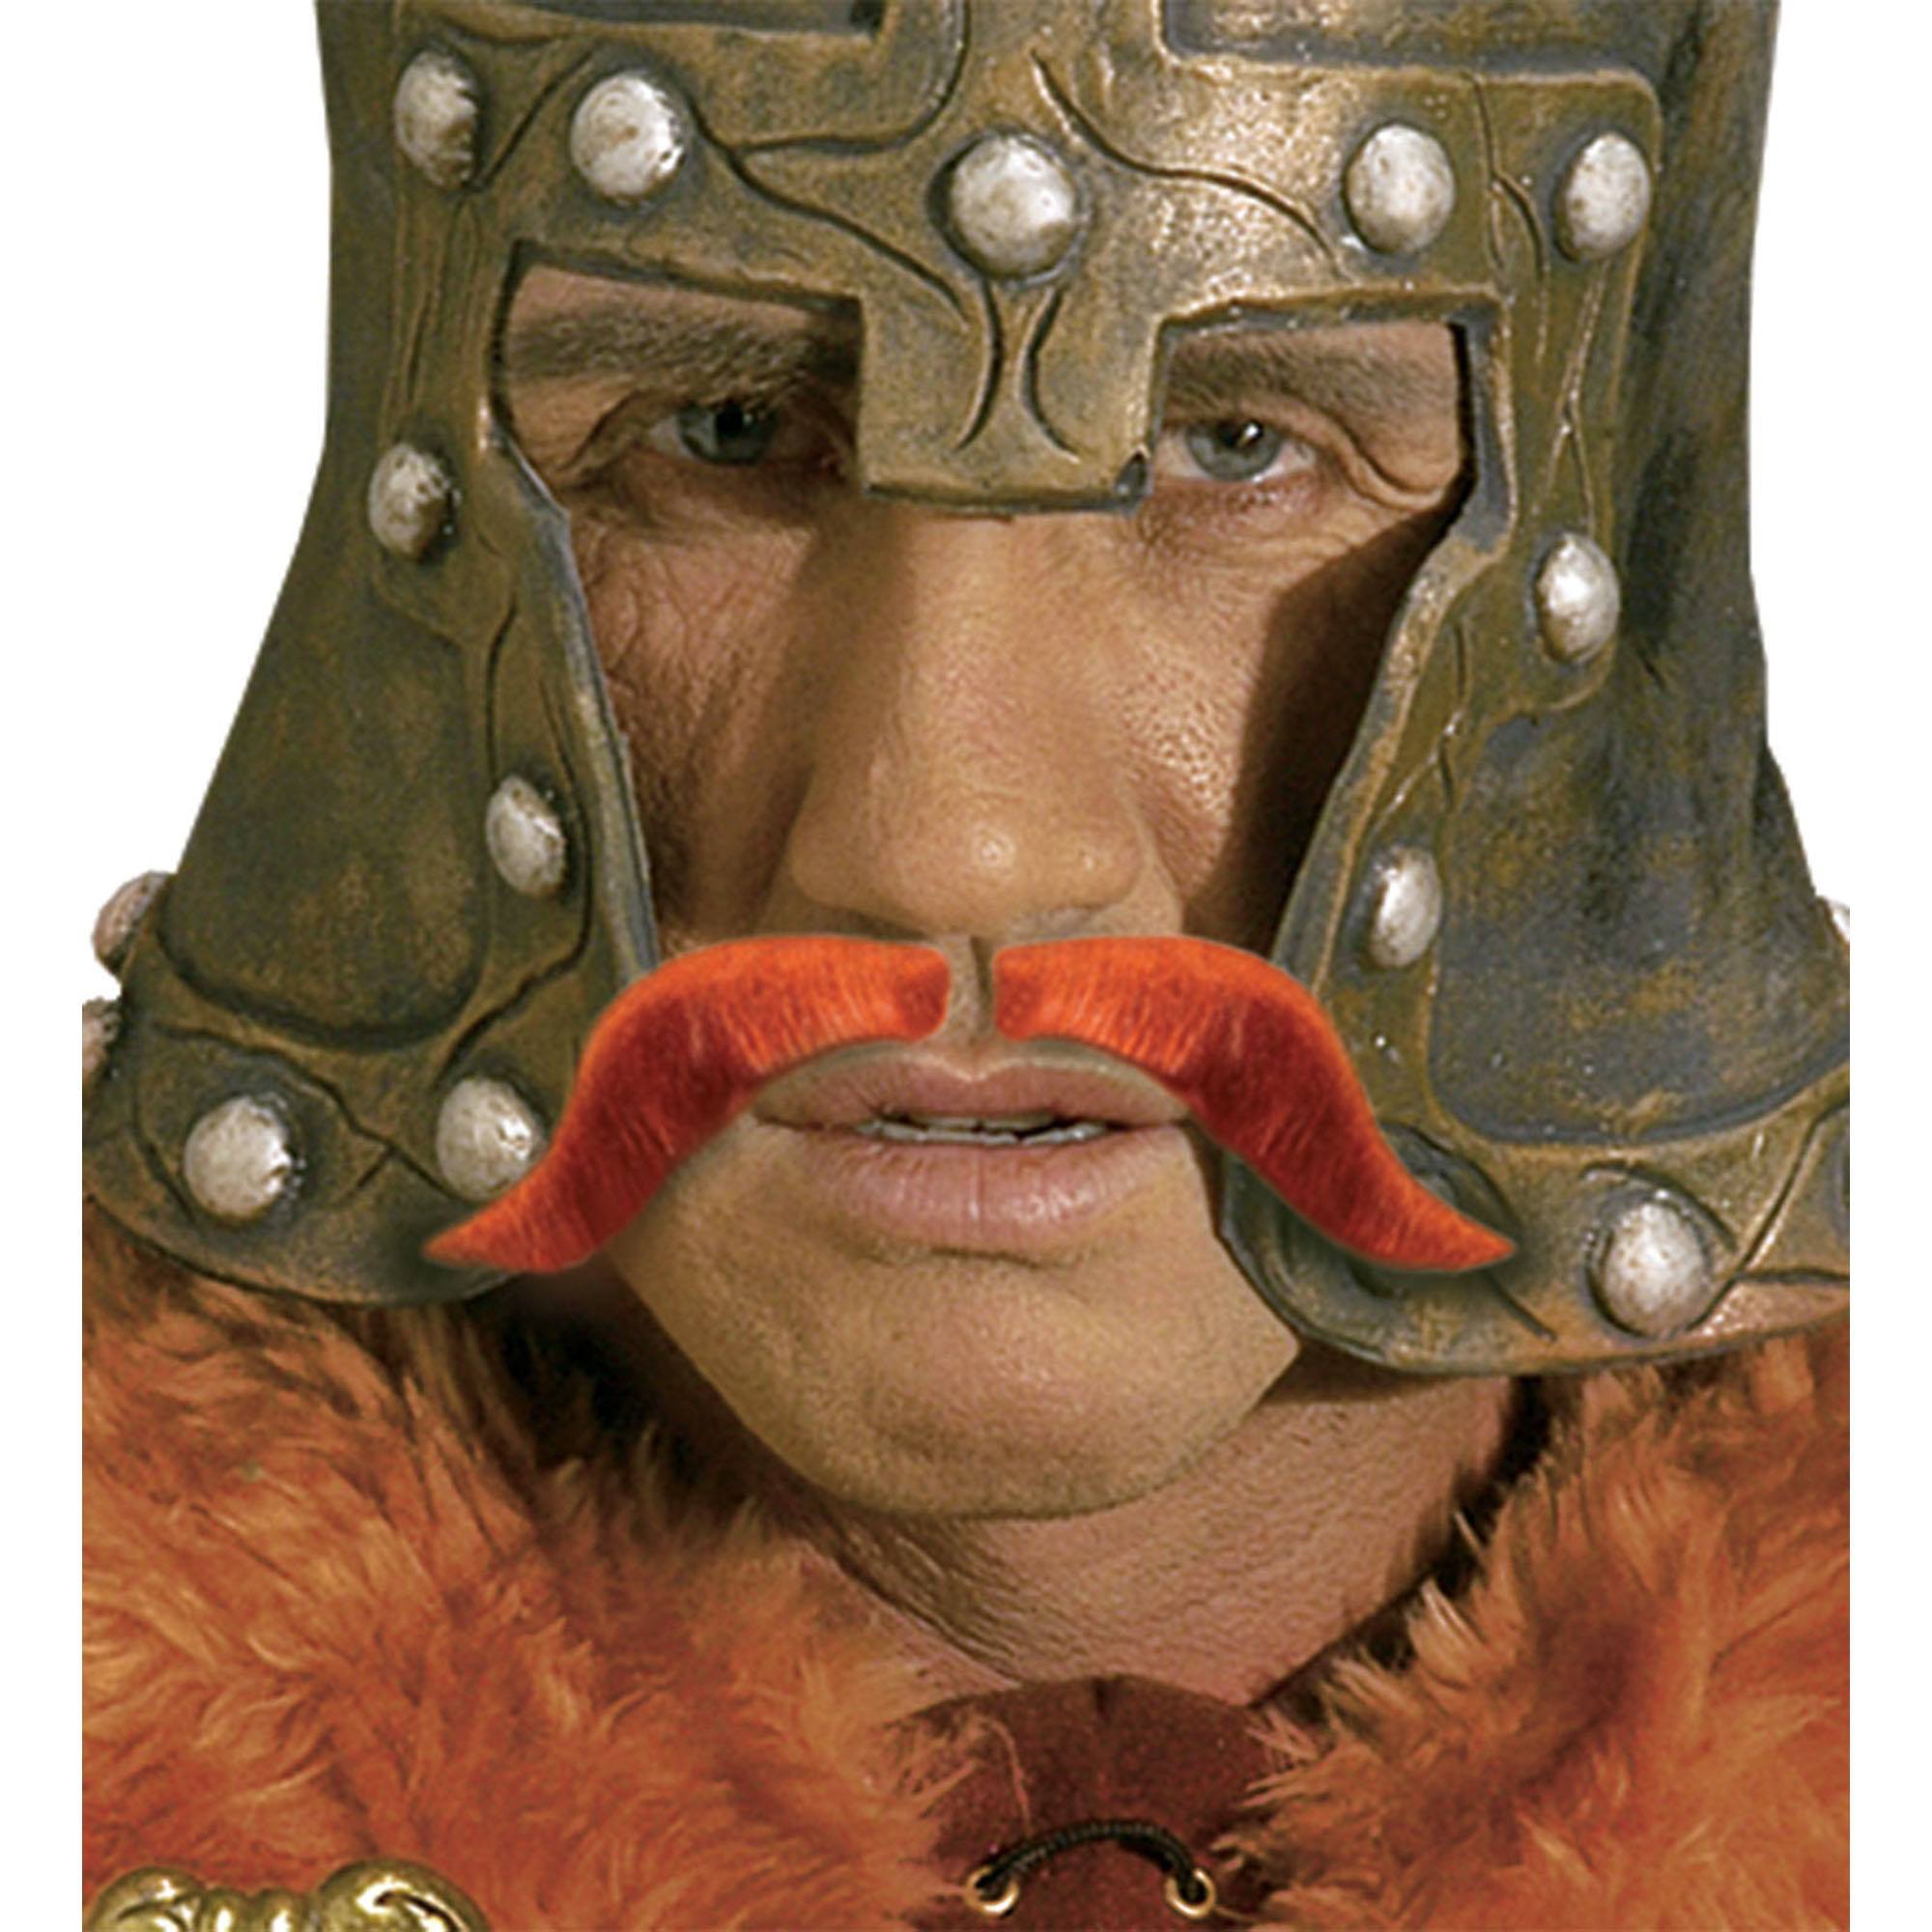 Viking snor kastanje rood